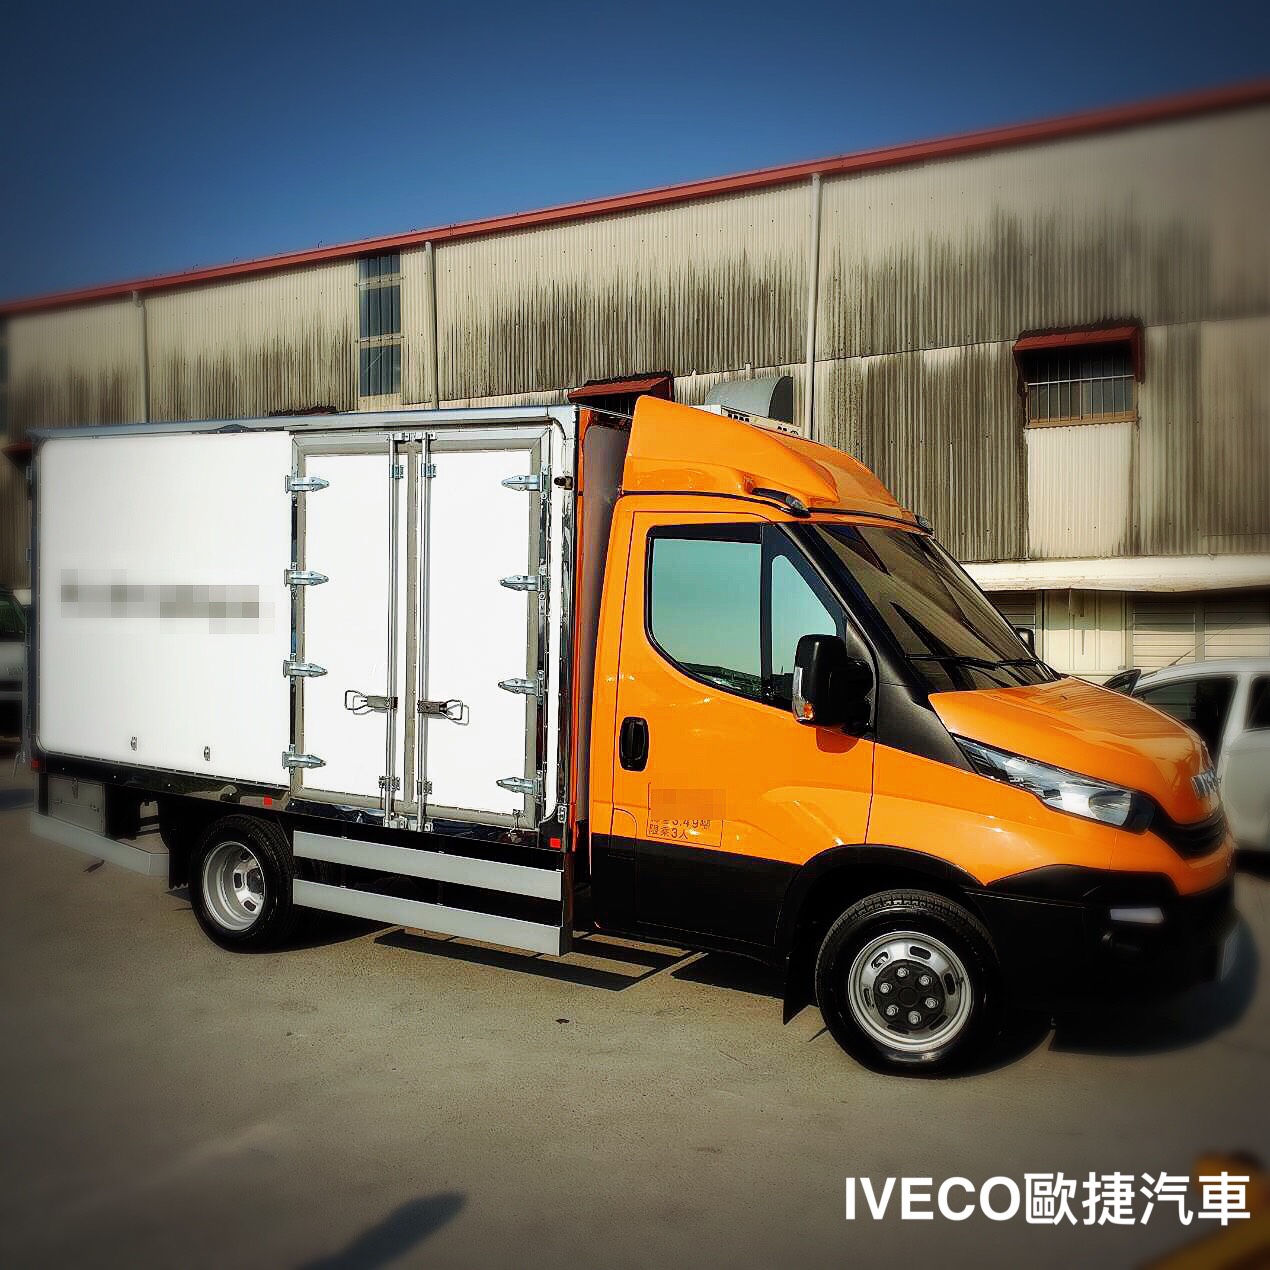 IVECO 冷凍貨車車廂/冷凍車